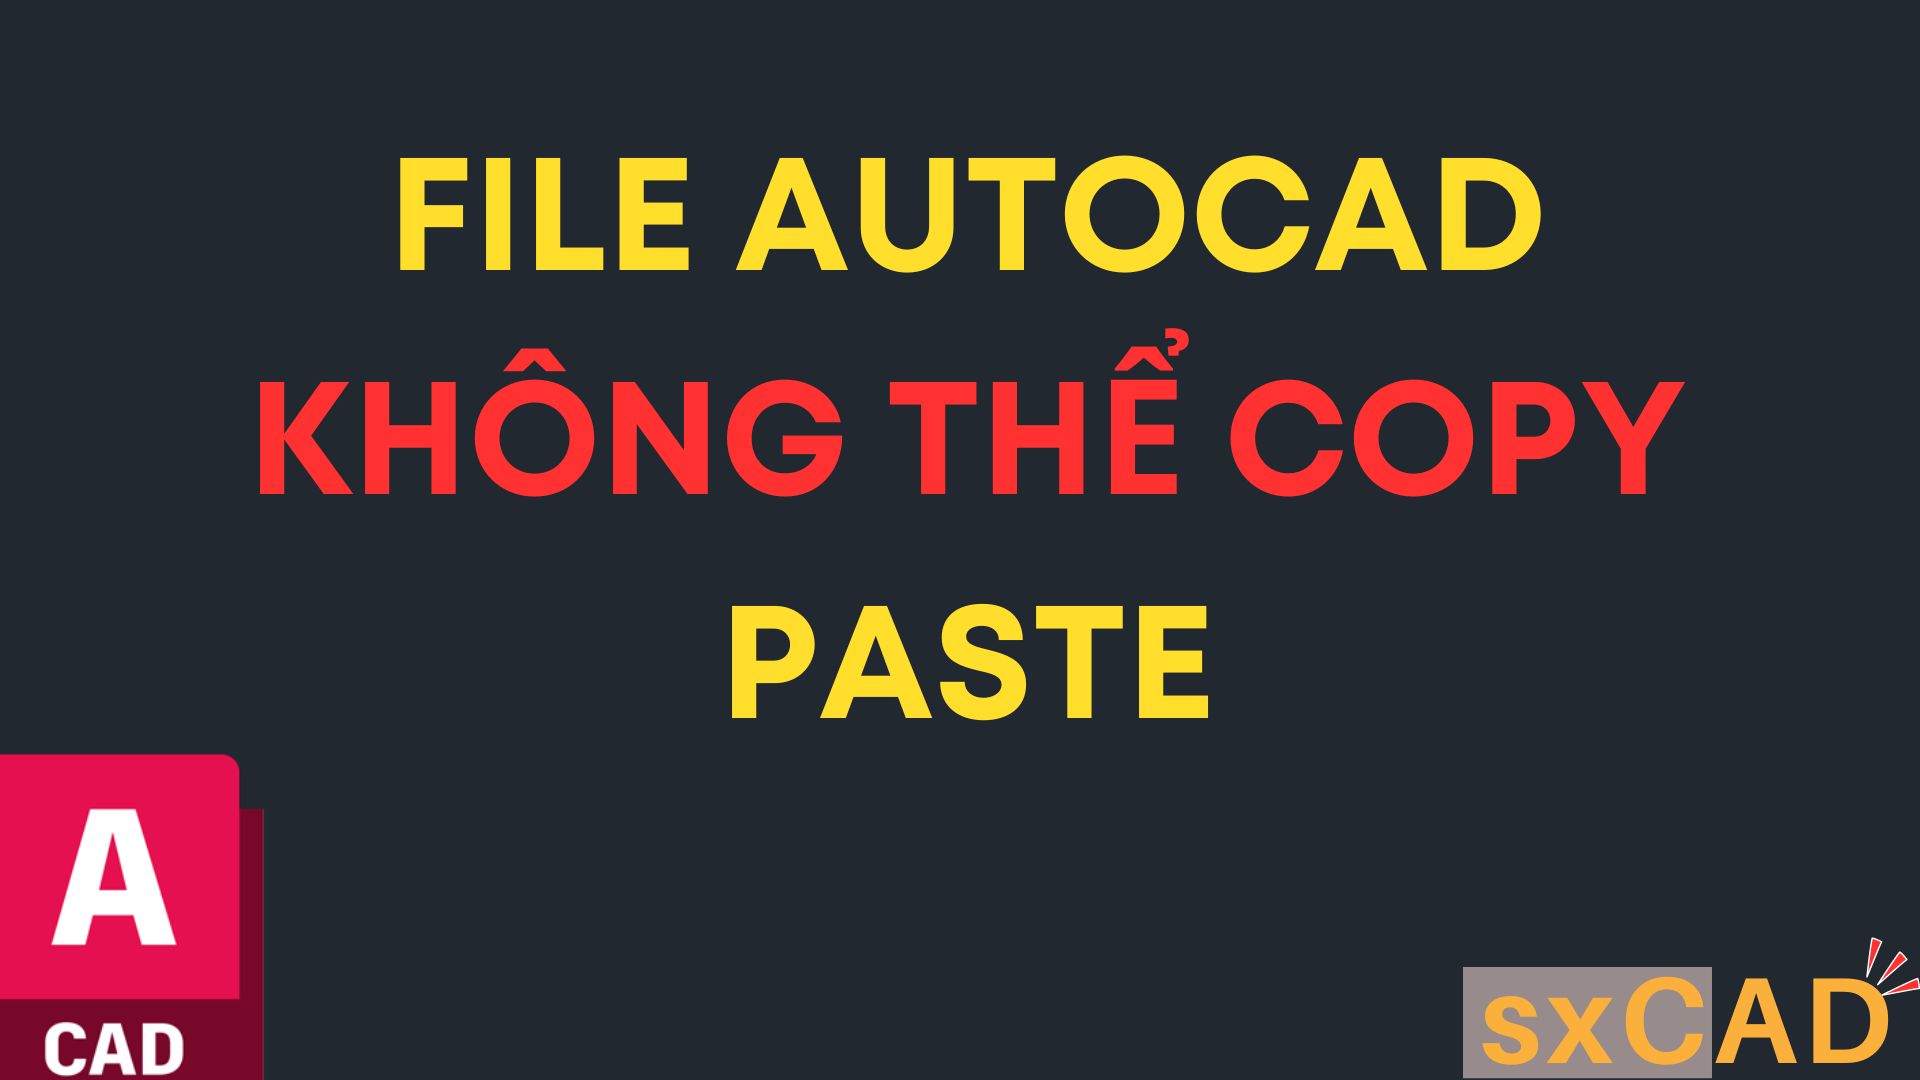 File AutoCAD không thể copy, paste clipboard